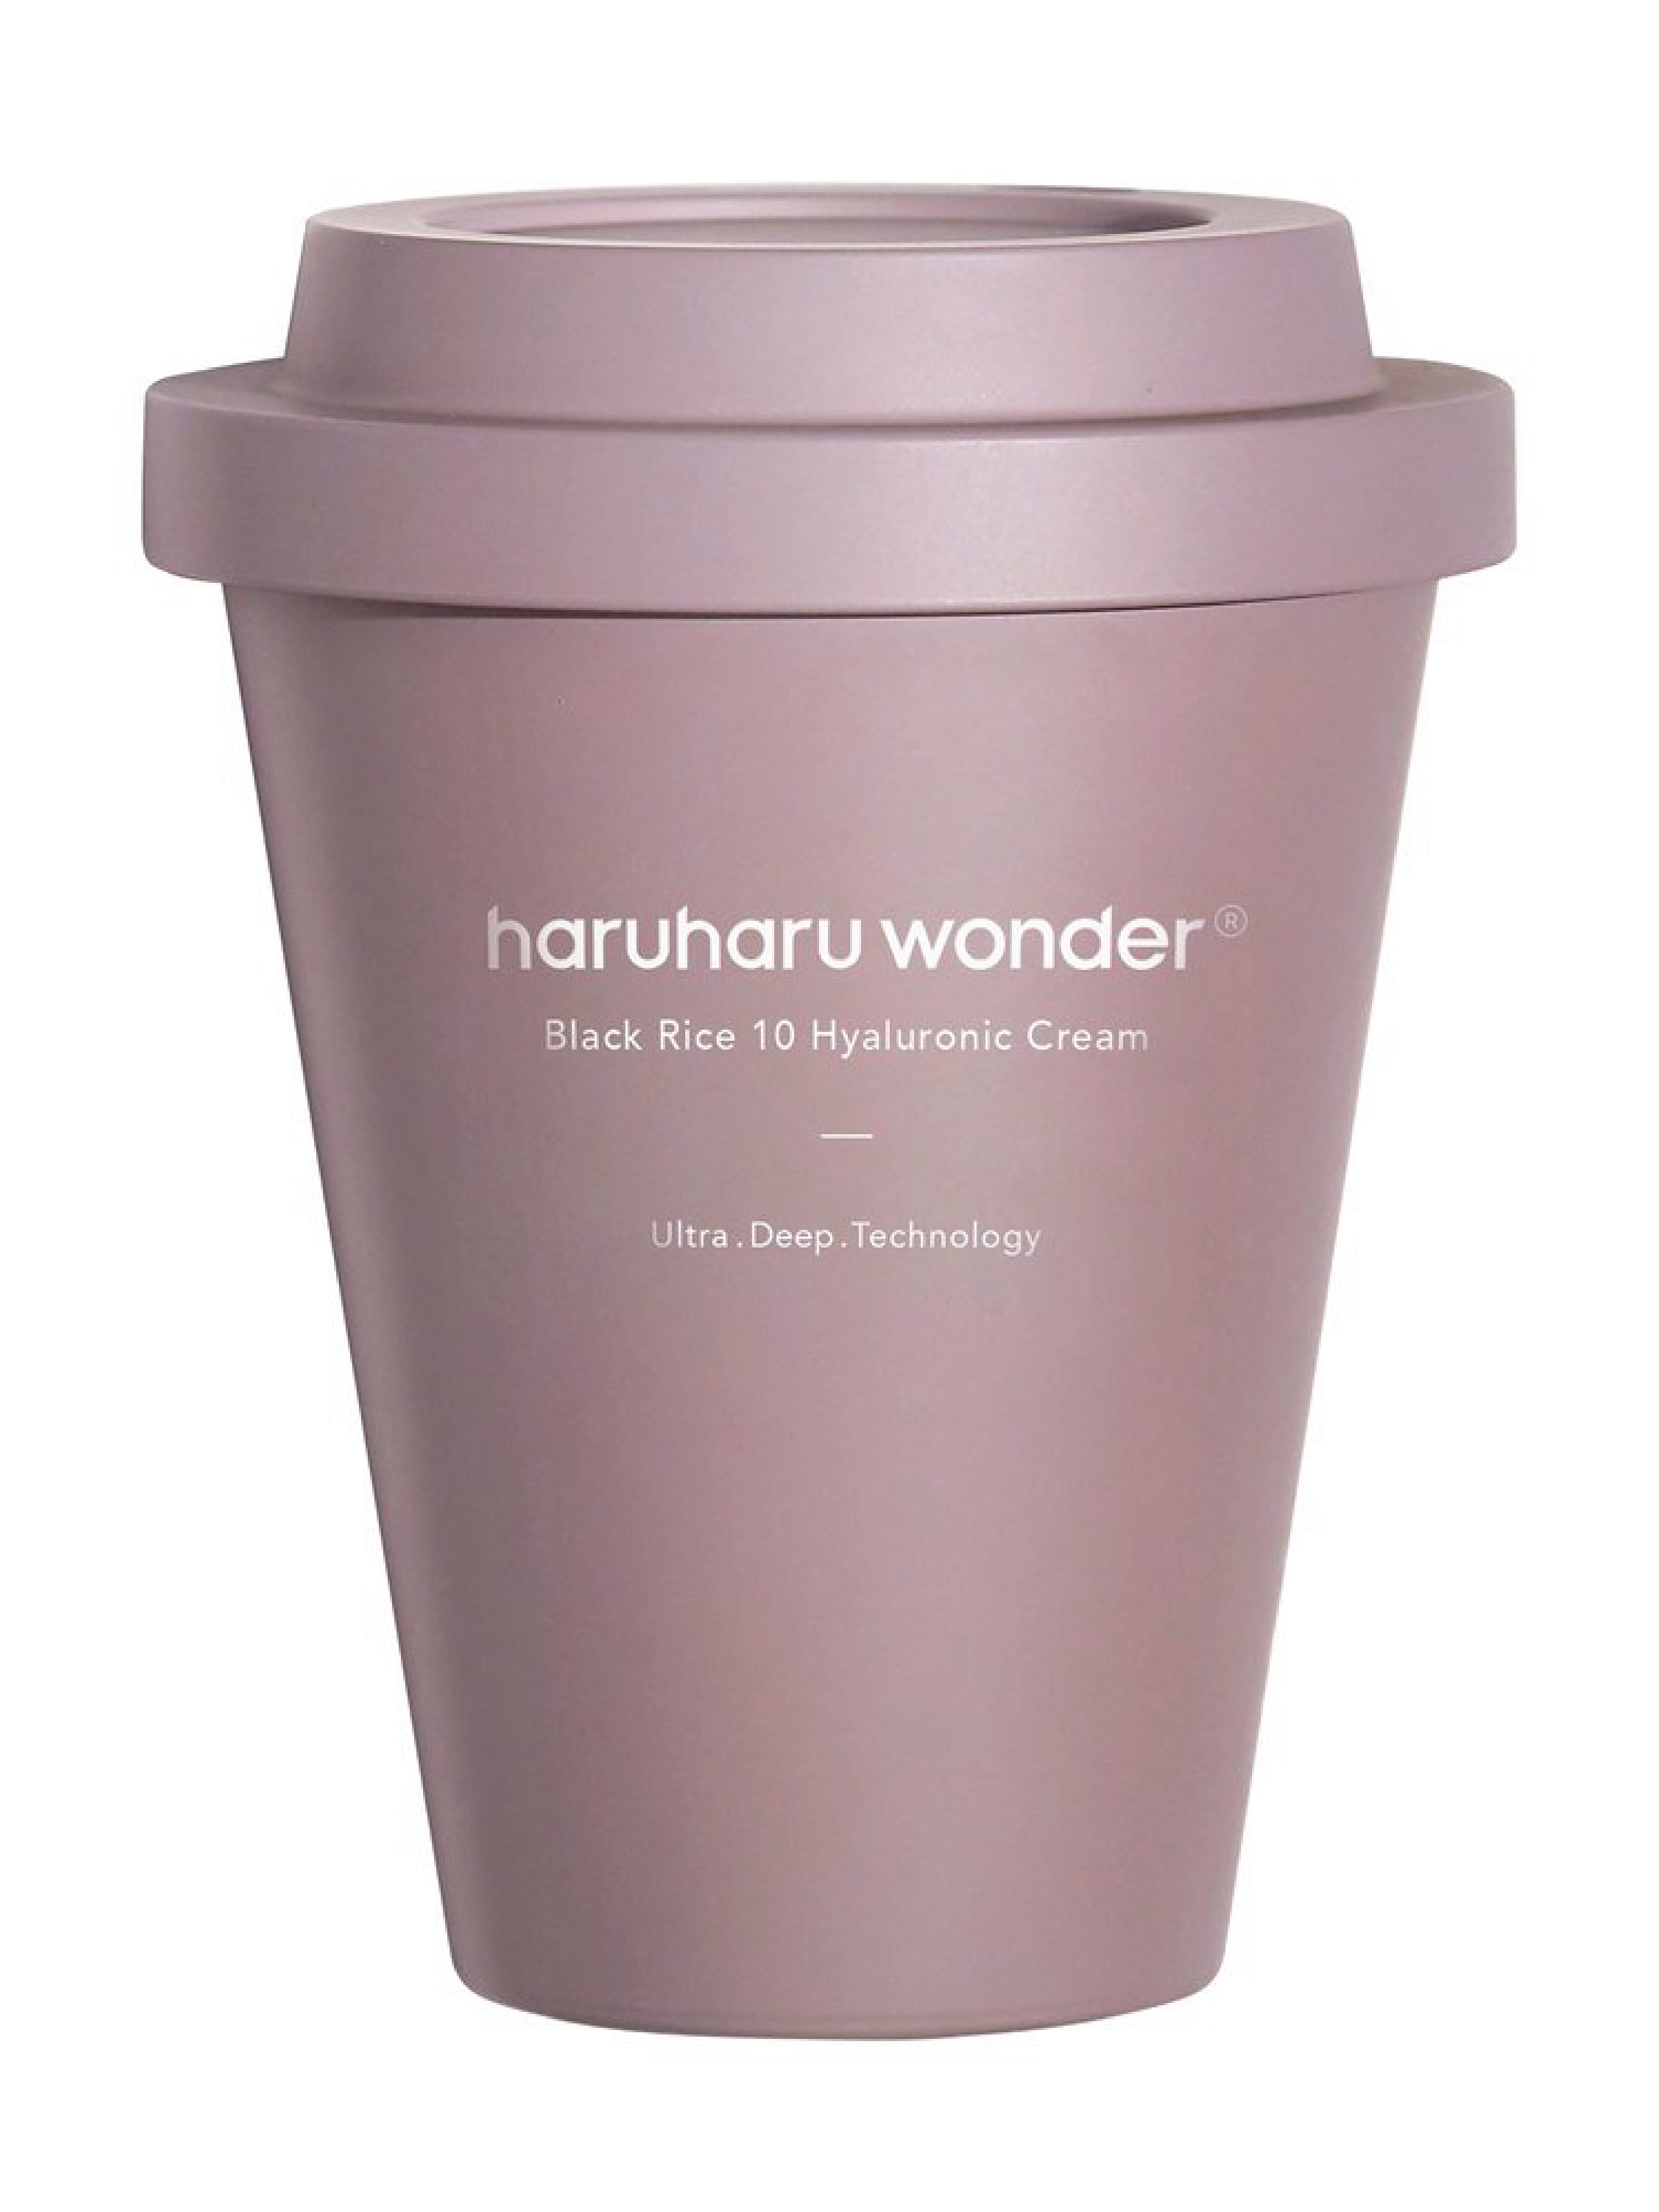 Haruharu Wonder Black Rice 10 Hyaluronic Cream, 90 ml